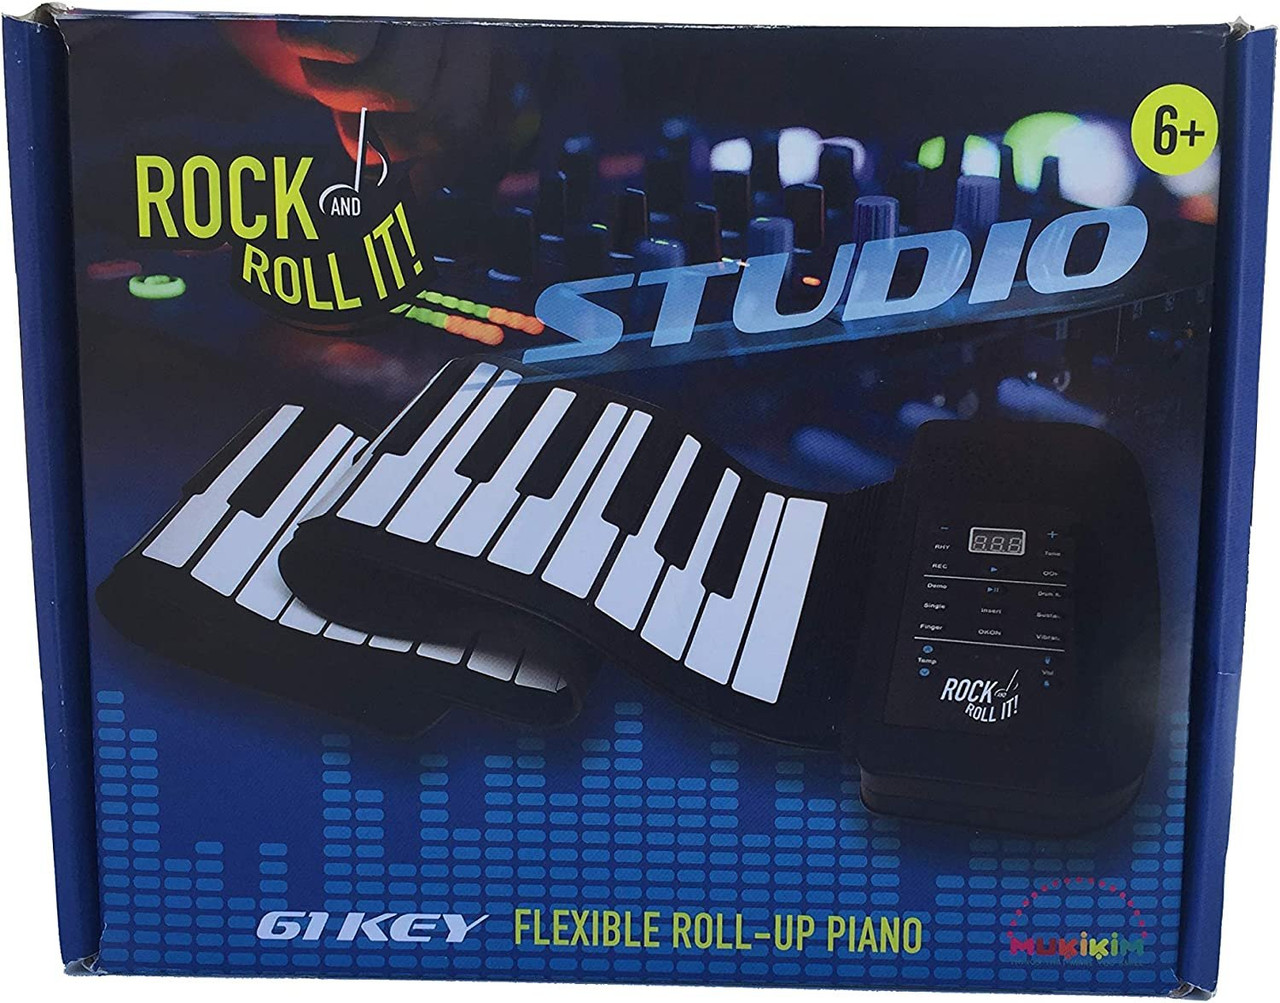  Digital Music Piano Keyboard 61 Key - Portable